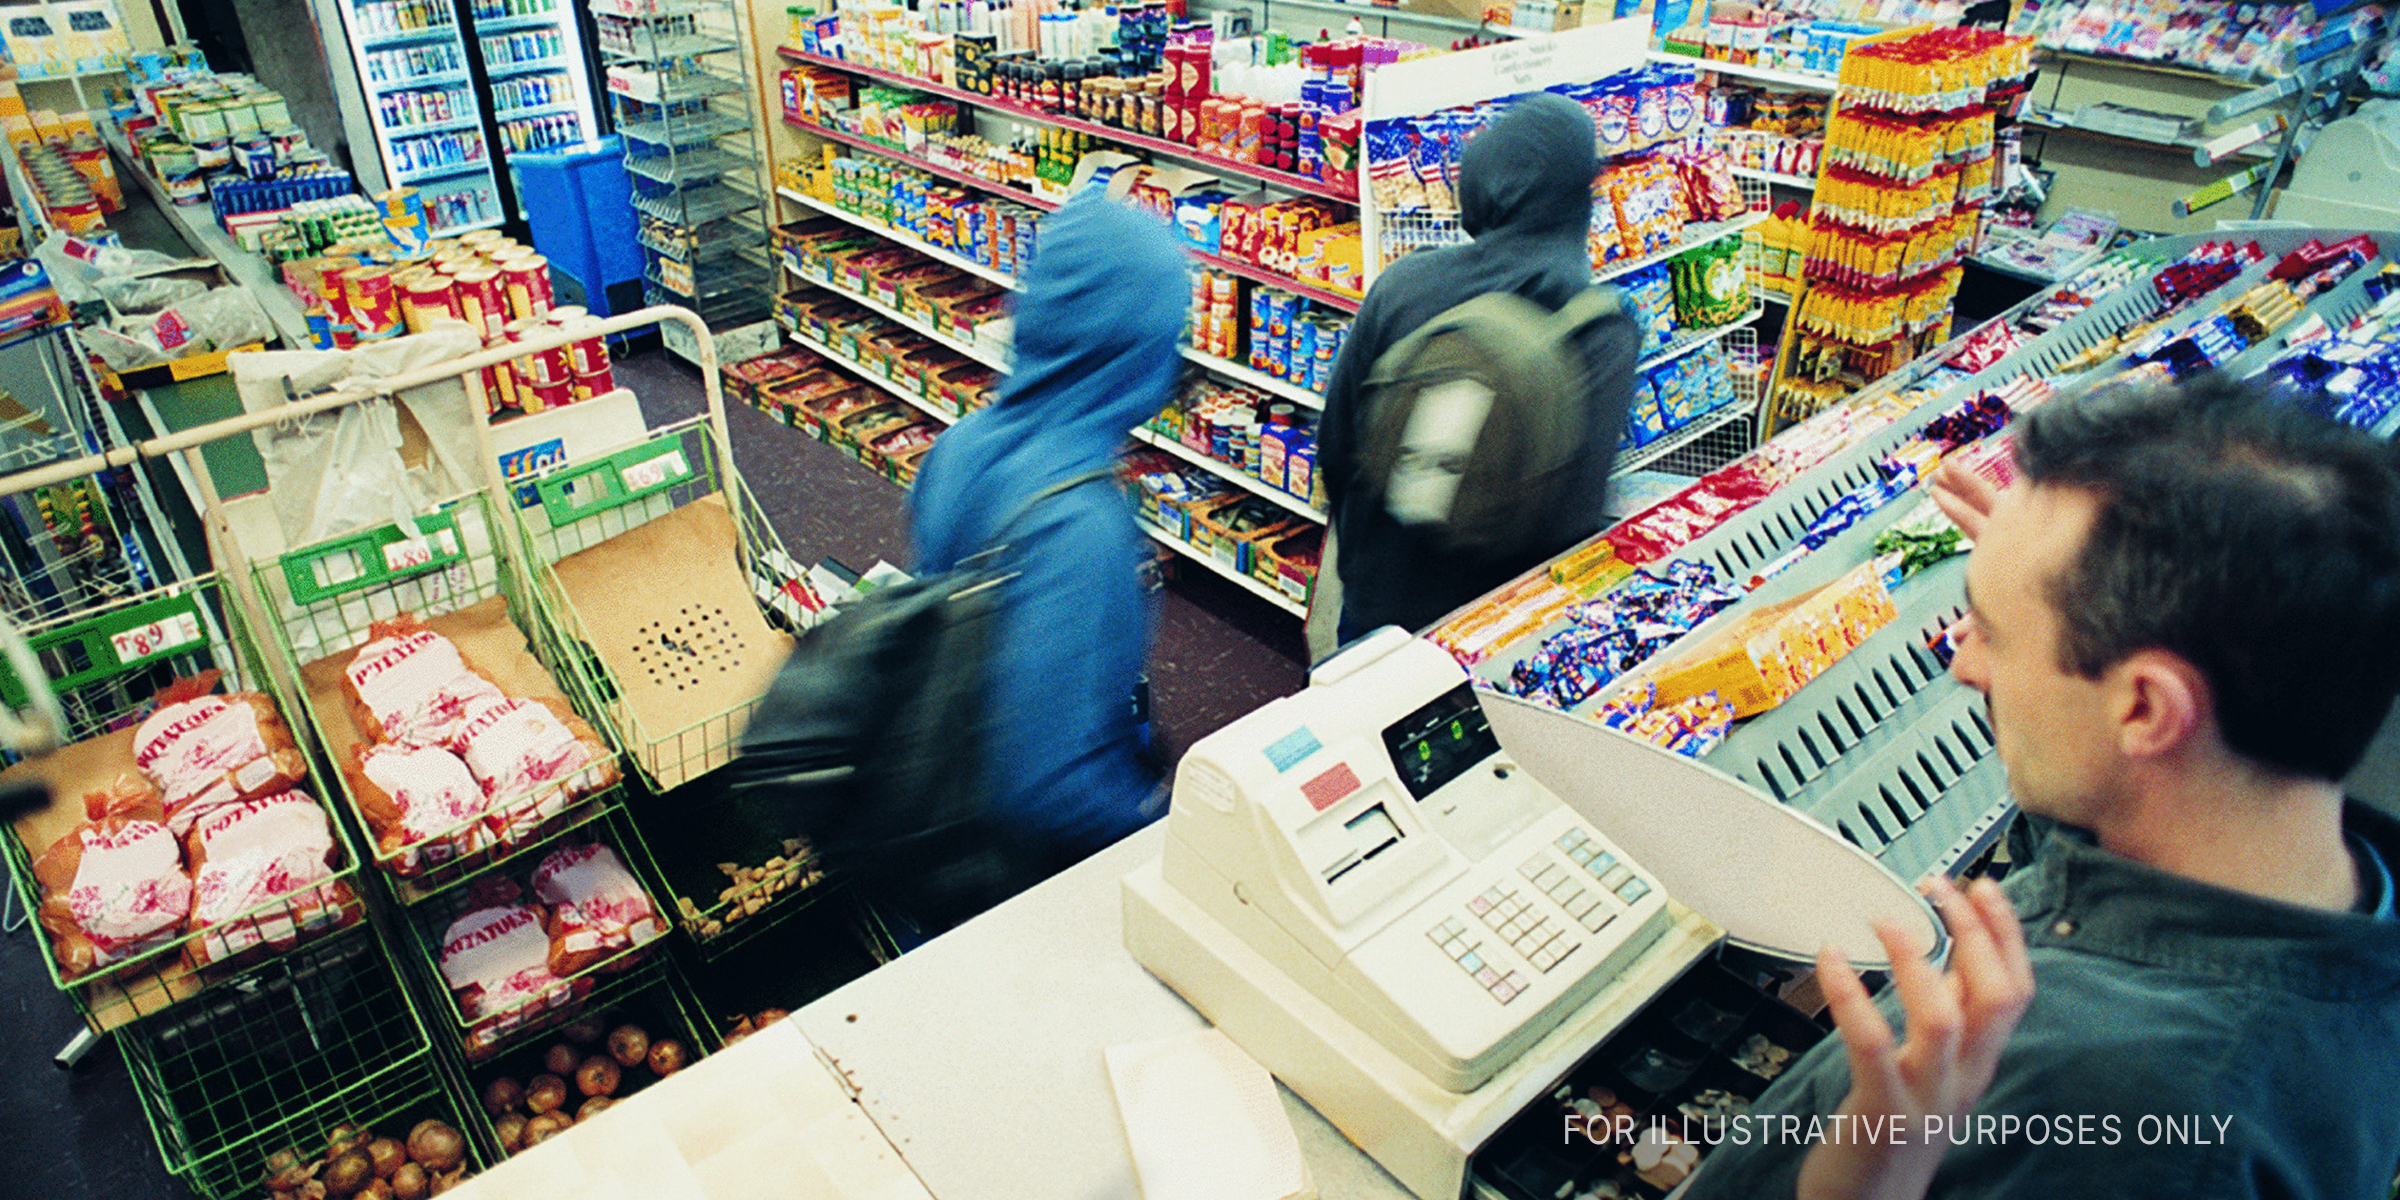 Hooded Men Robbing A Store. | Source: Shutterstock